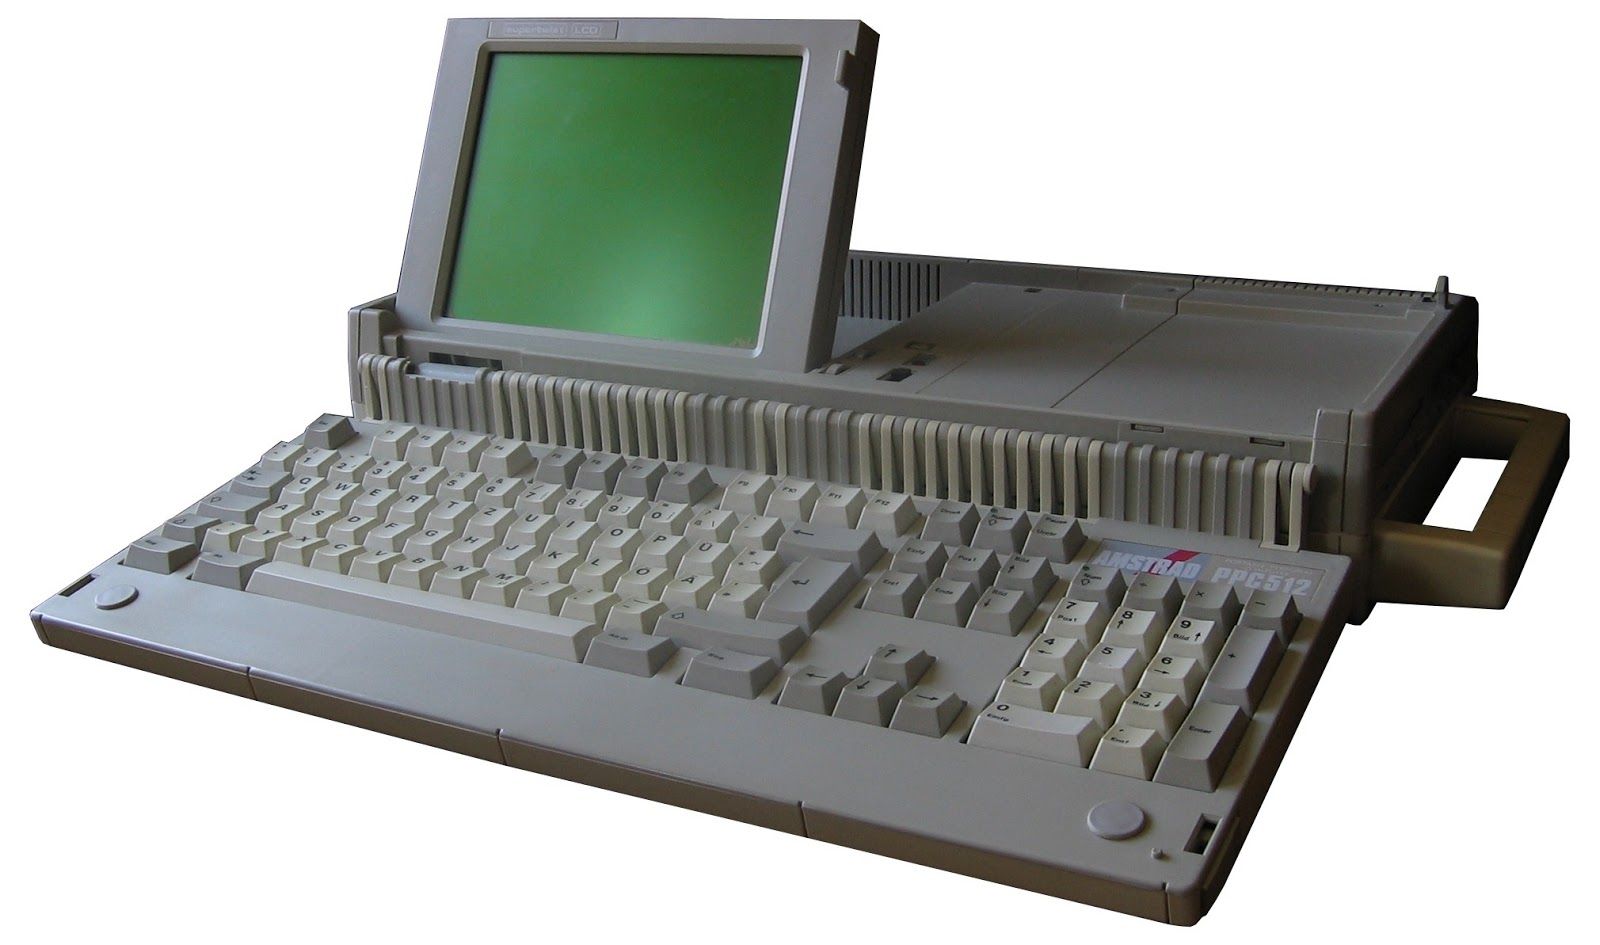 Amstrad-Portable.jpg